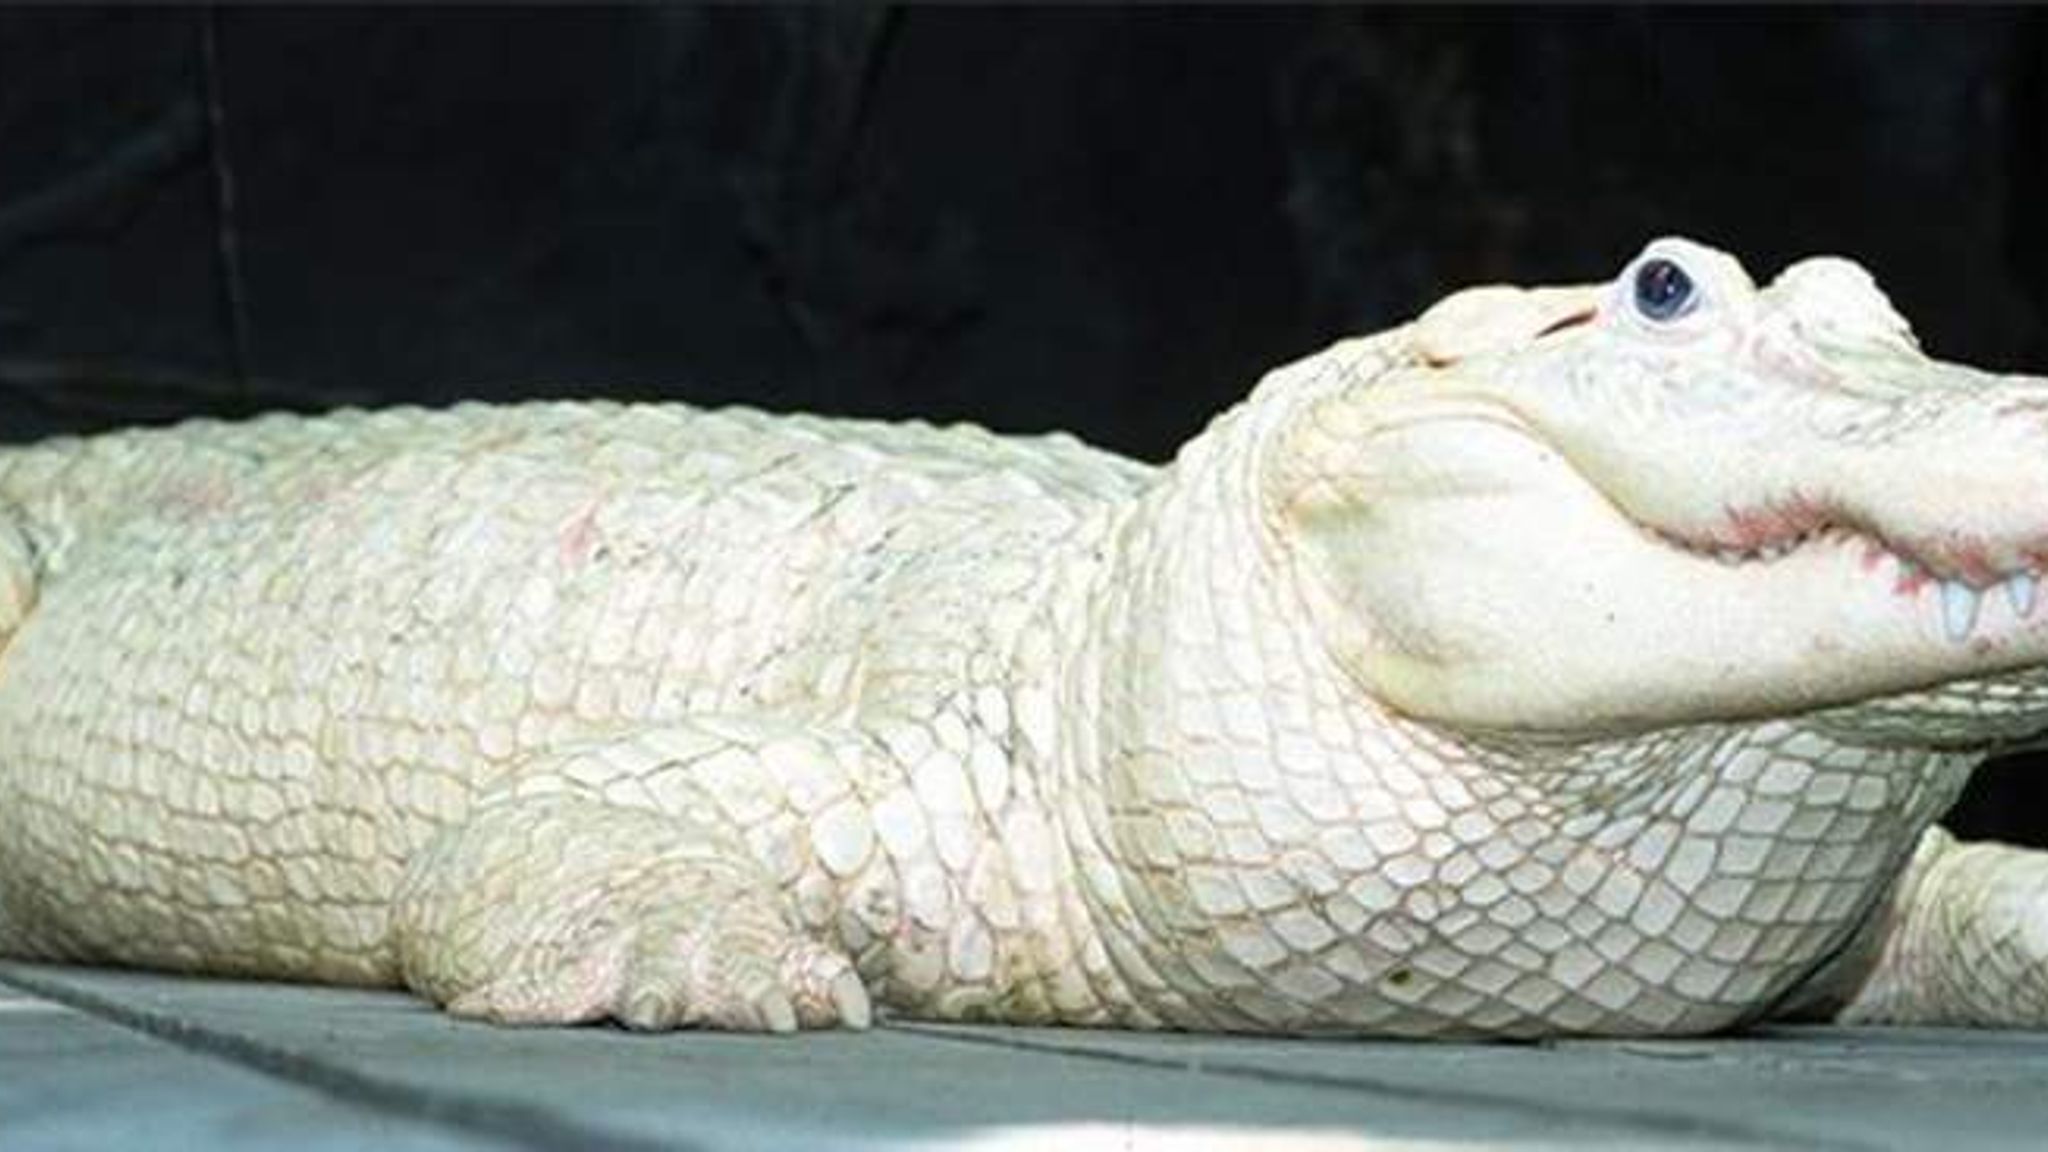 Rare White Alligator 'Spots' Dies, Aged 28 US News Sky News